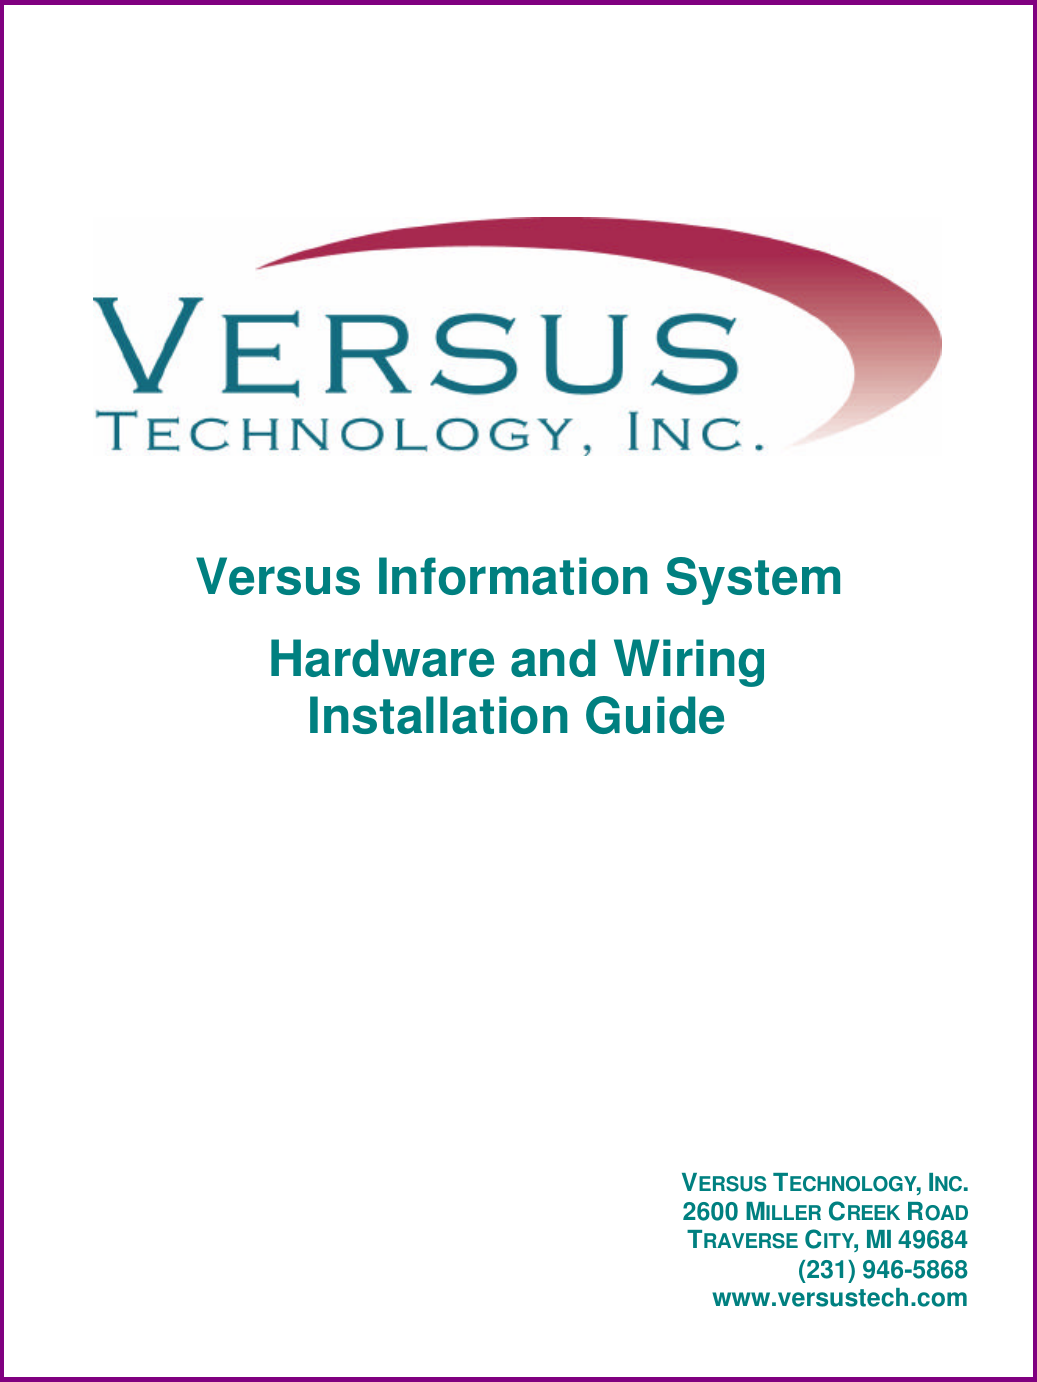       Versus Information System Hardware and Wiring Installation Guide            VERSUS TECHNOLOGY, INC. 2600 MILLER CREEK ROAD TRAVERSE CITY, MI 49684 (231) 946-5868 www.versustech.com